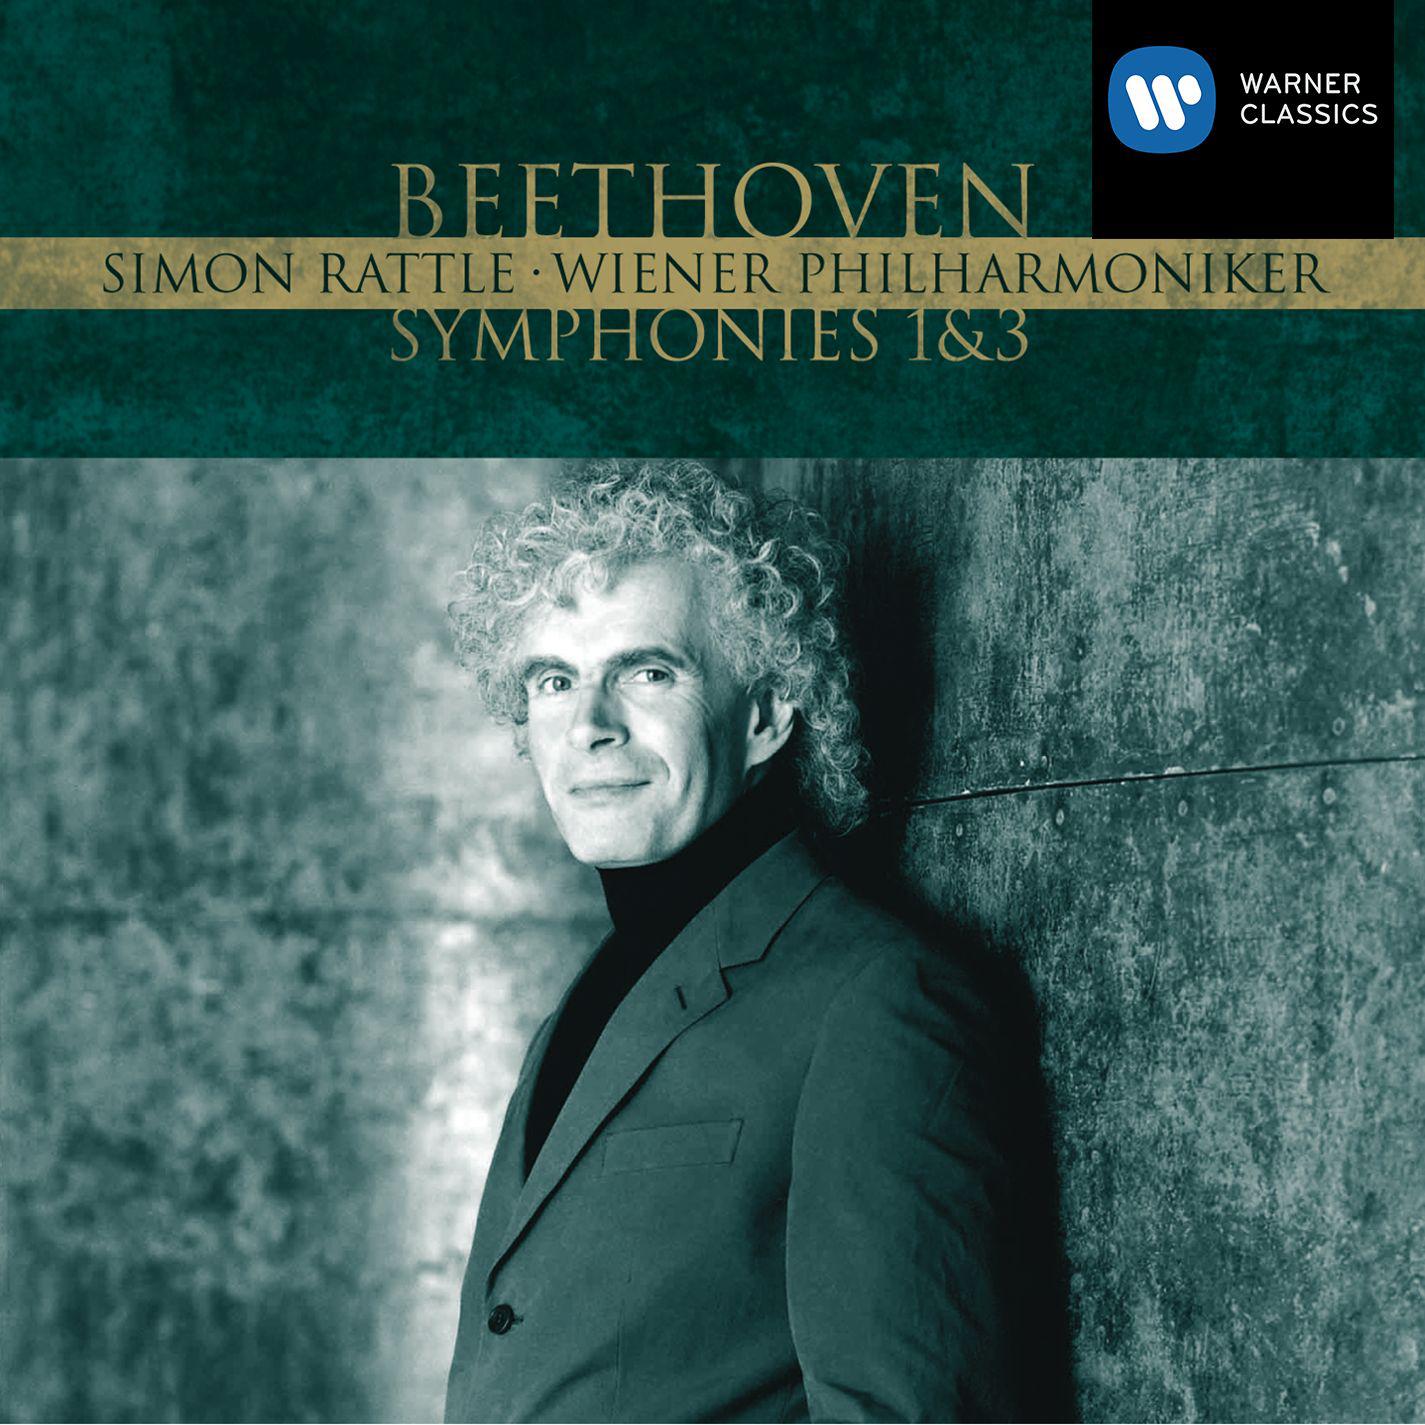 Beethoven: Symphonies Nos 1 & 3, "Eroica"